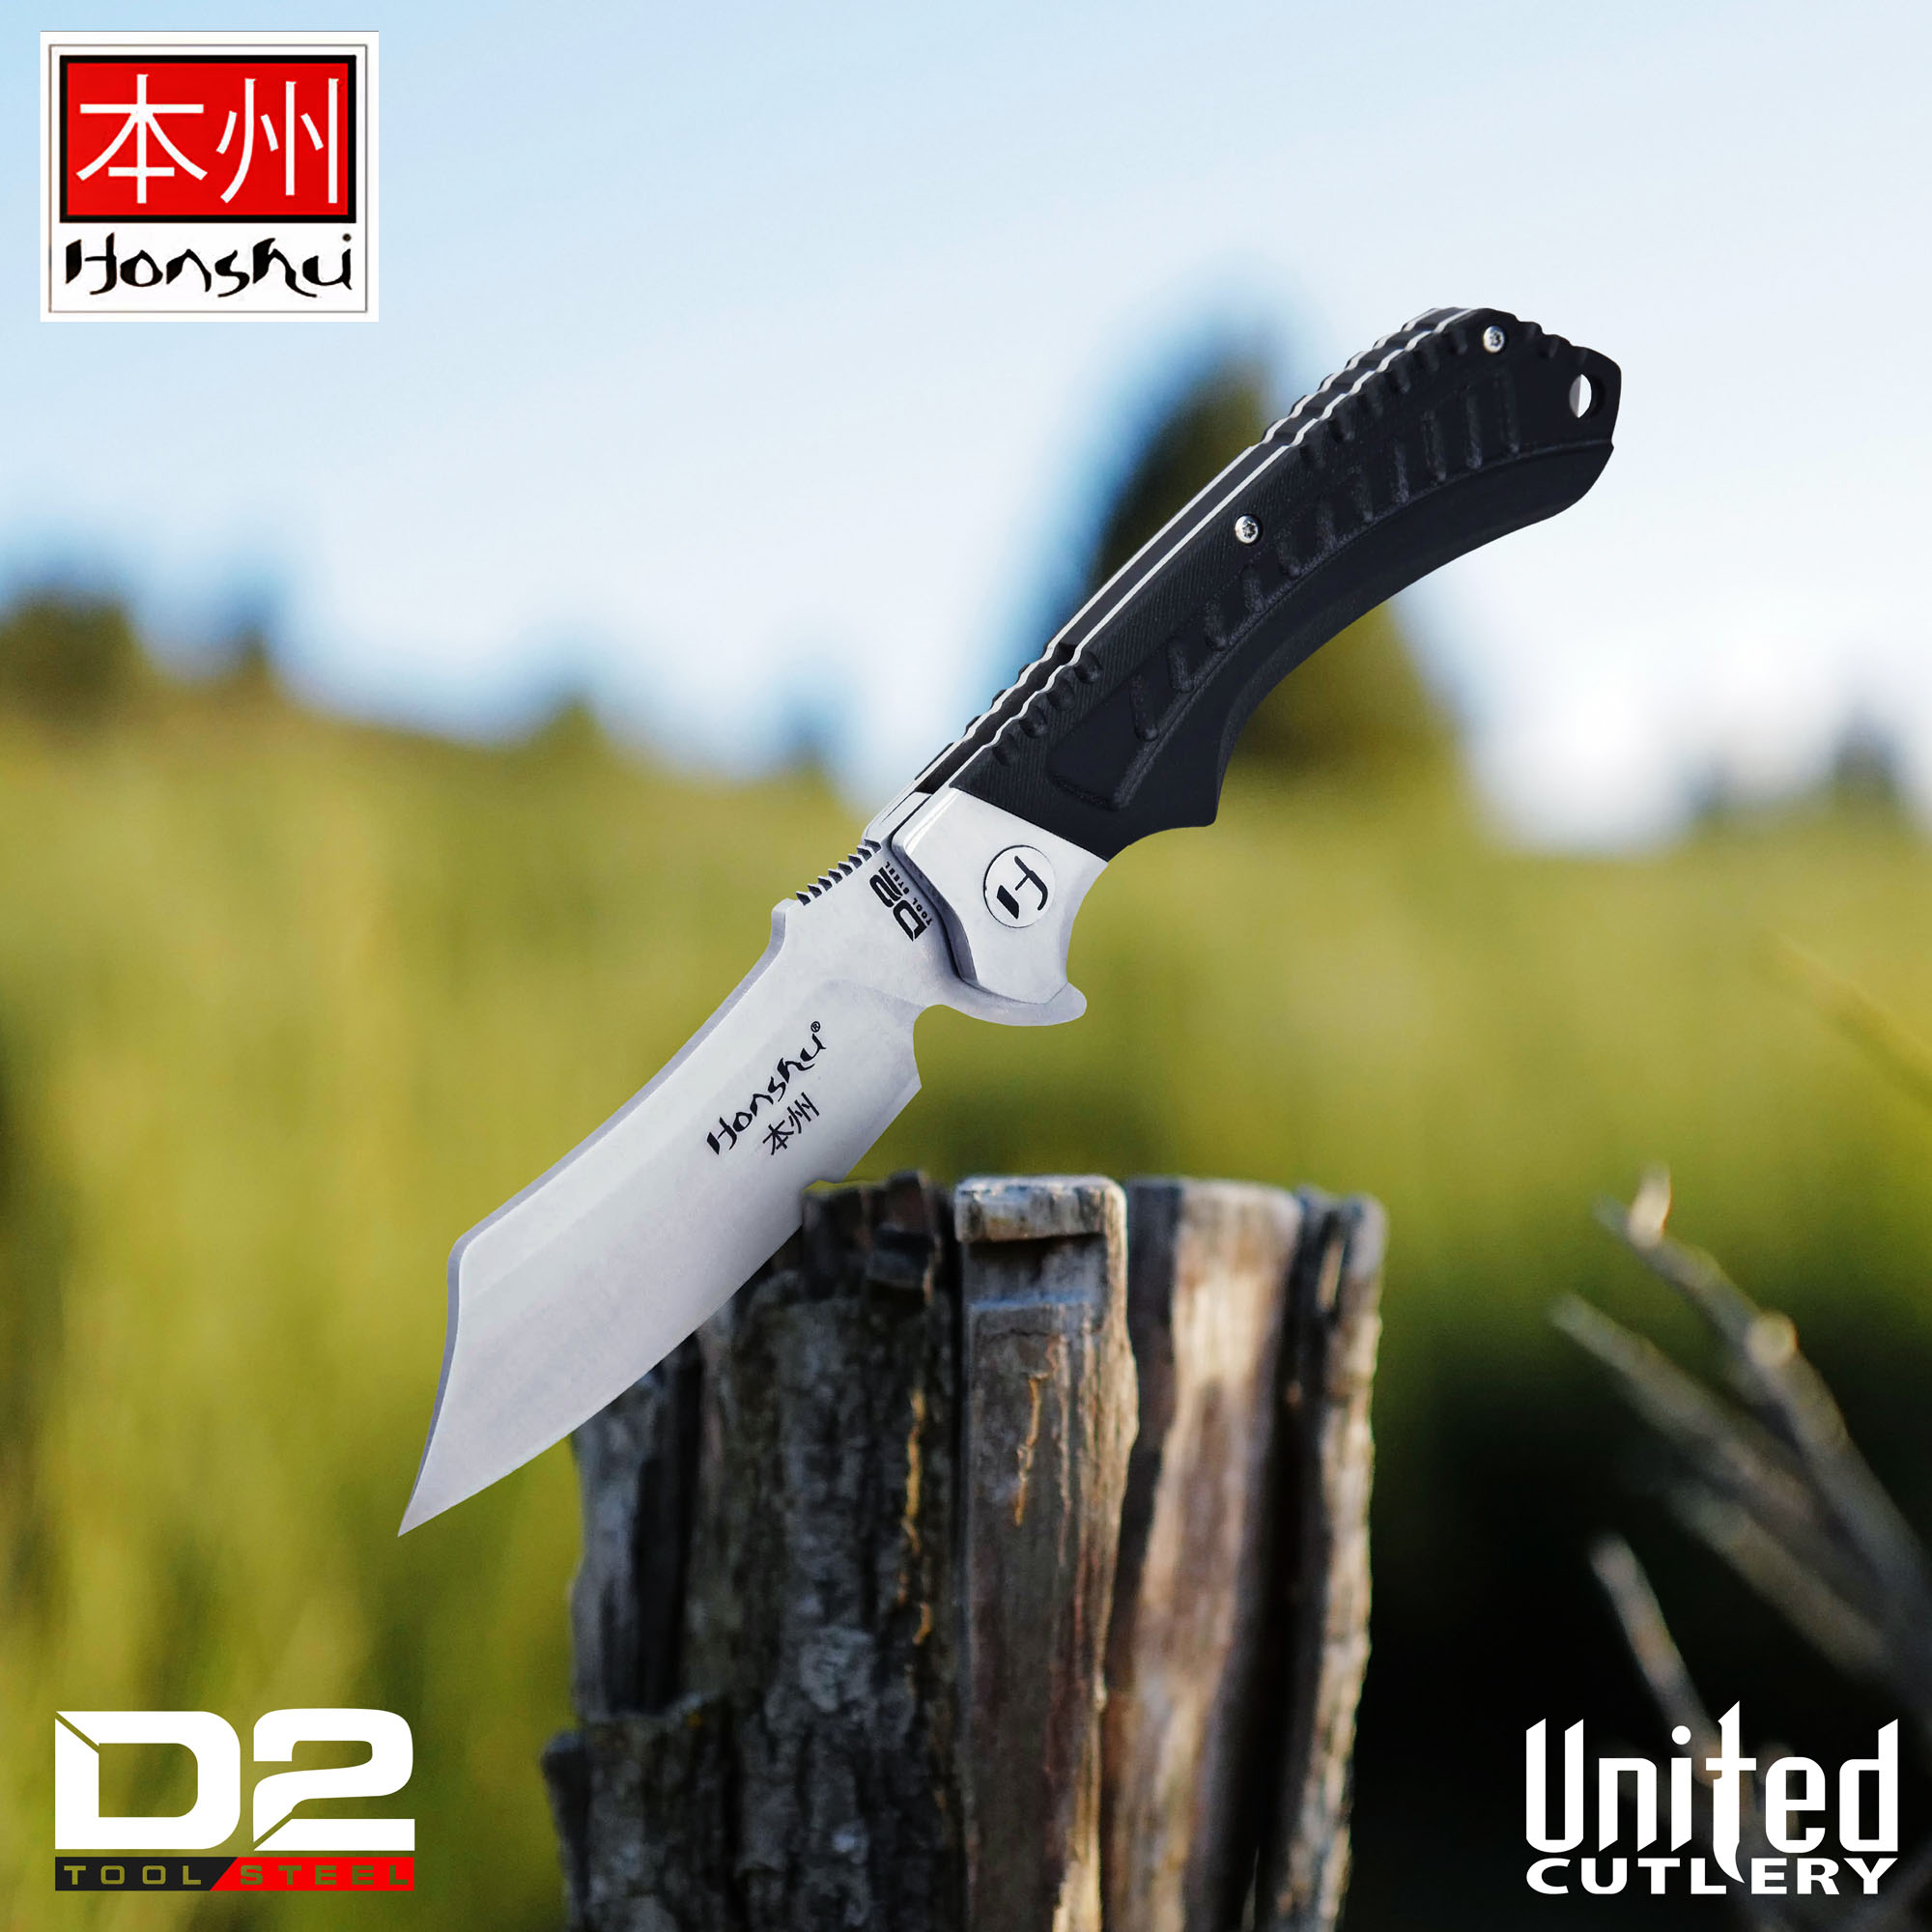 Honshu Sekyuriti Razor Pocket Knife - D2 Tool Steel Blade